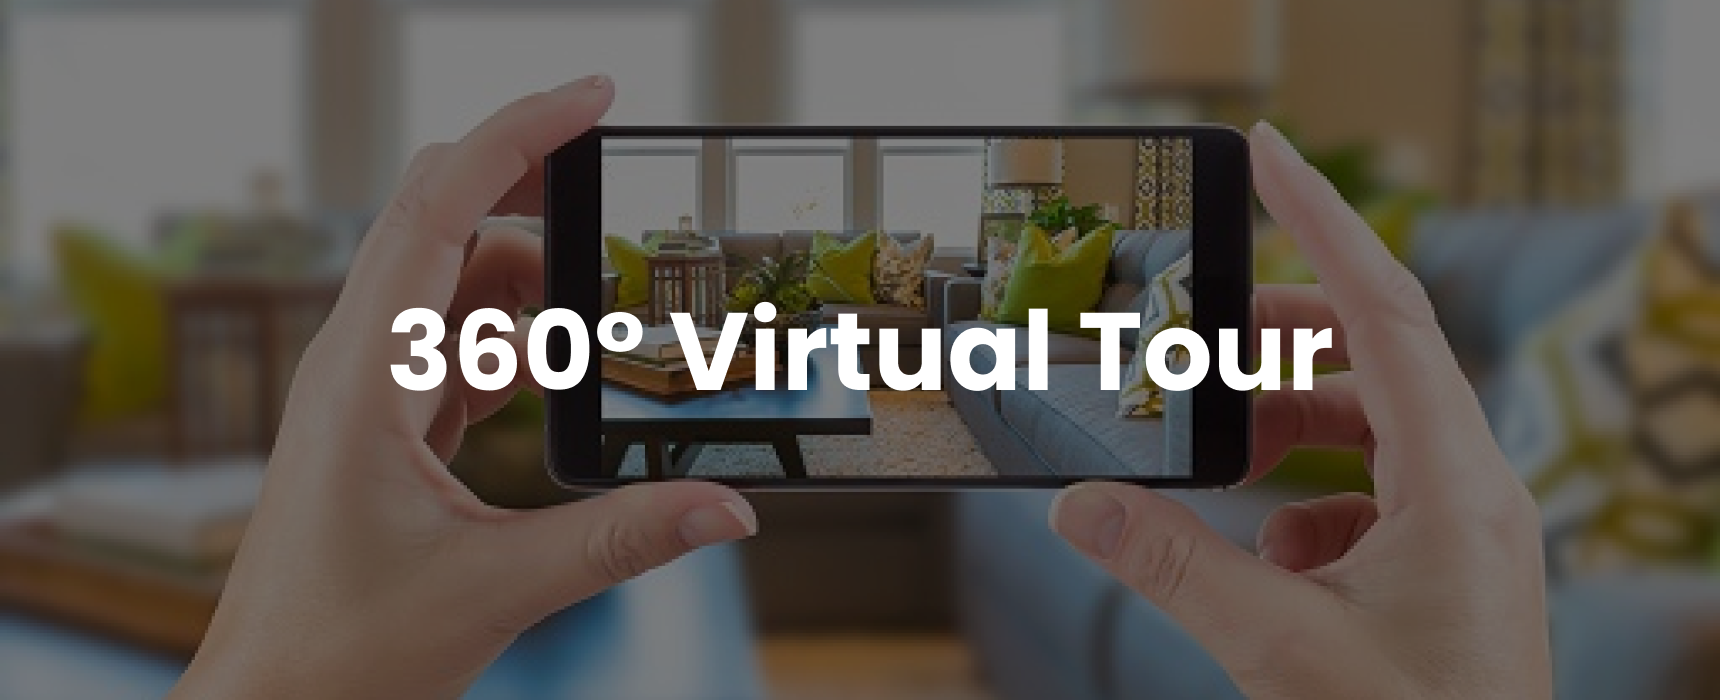 Real Estate App 360 Virtual Tour